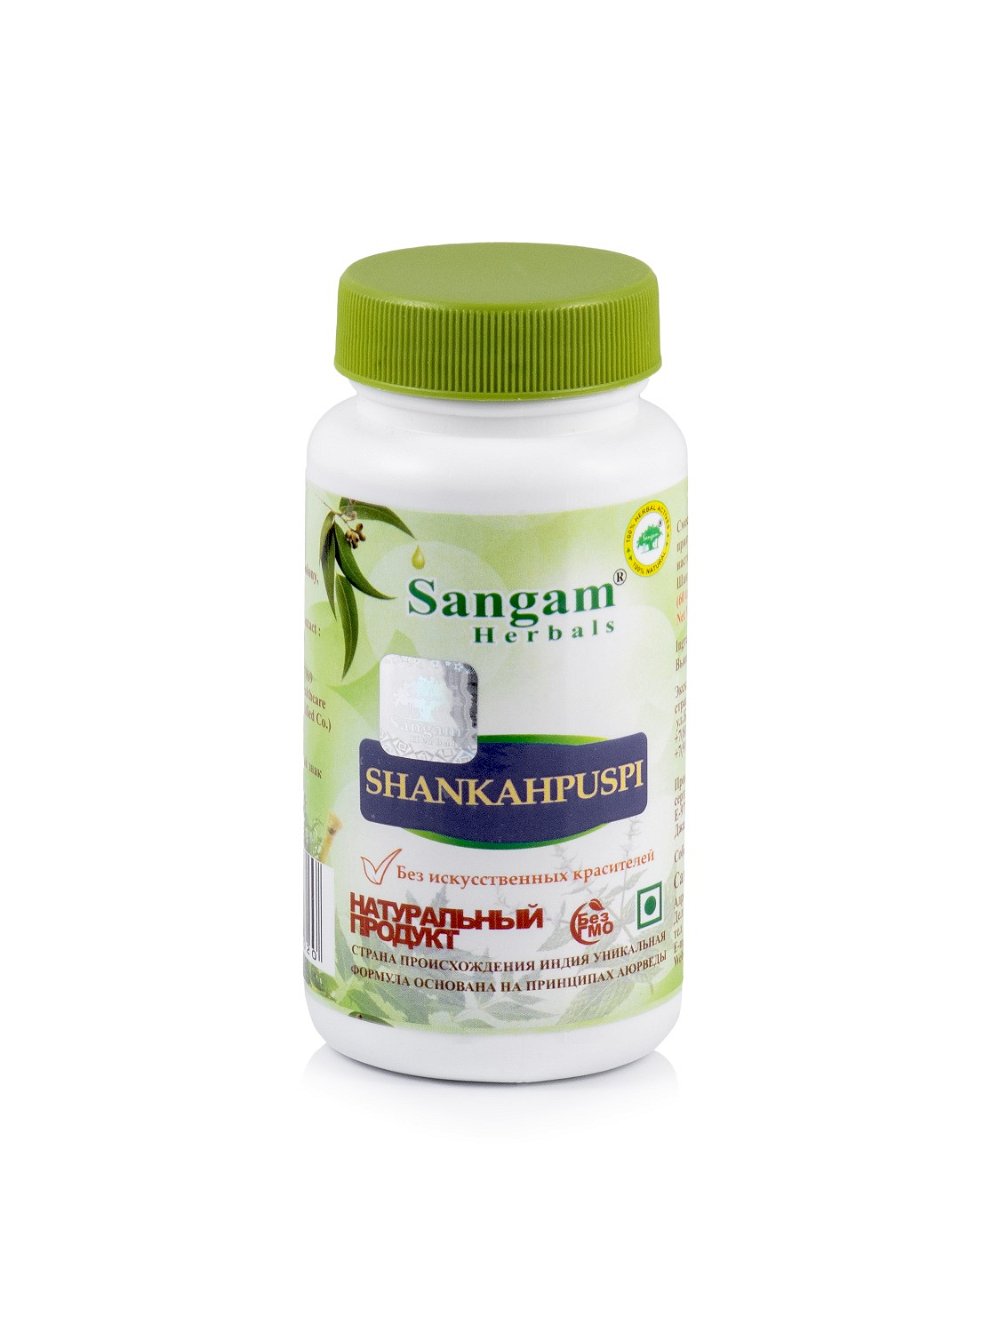 Шанкхапушпи Sangam Herbals (60 таблеток), Шанкхапушпи